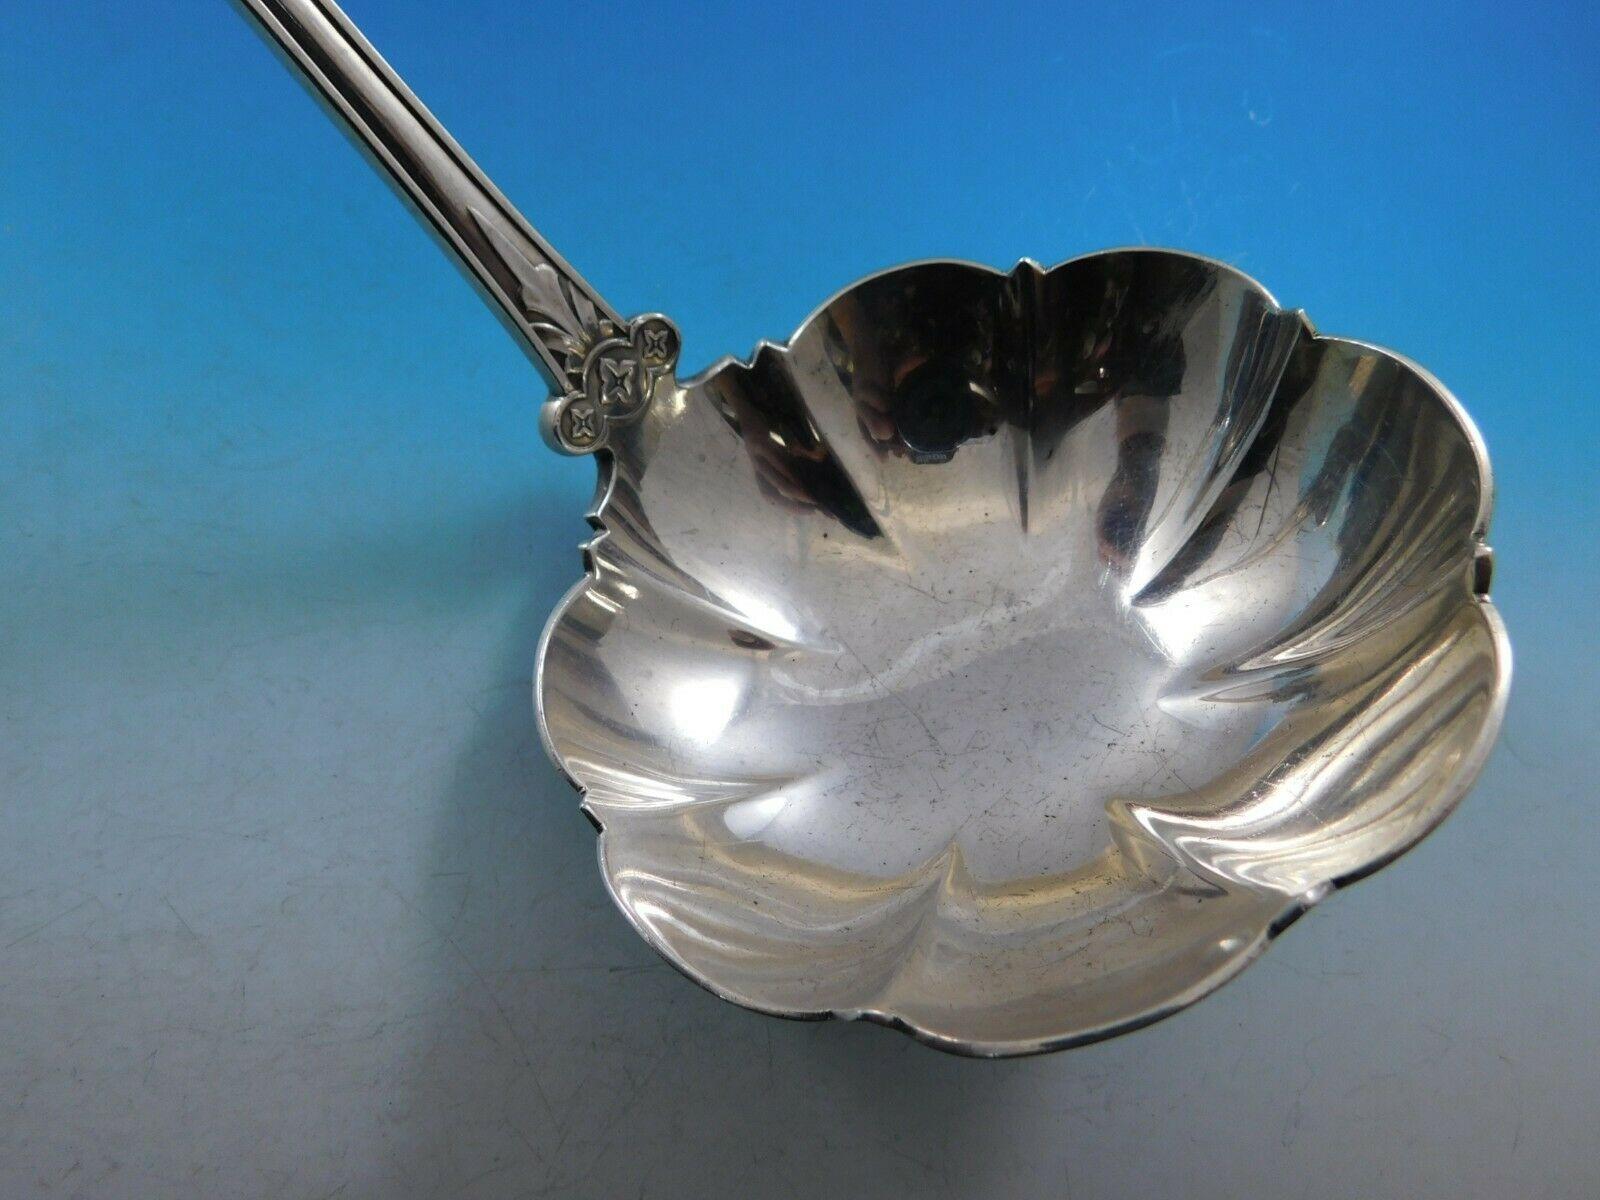 Medallion by Hotchkiss & Schreuder

Lovely sterling silver soup ladle measuring 13